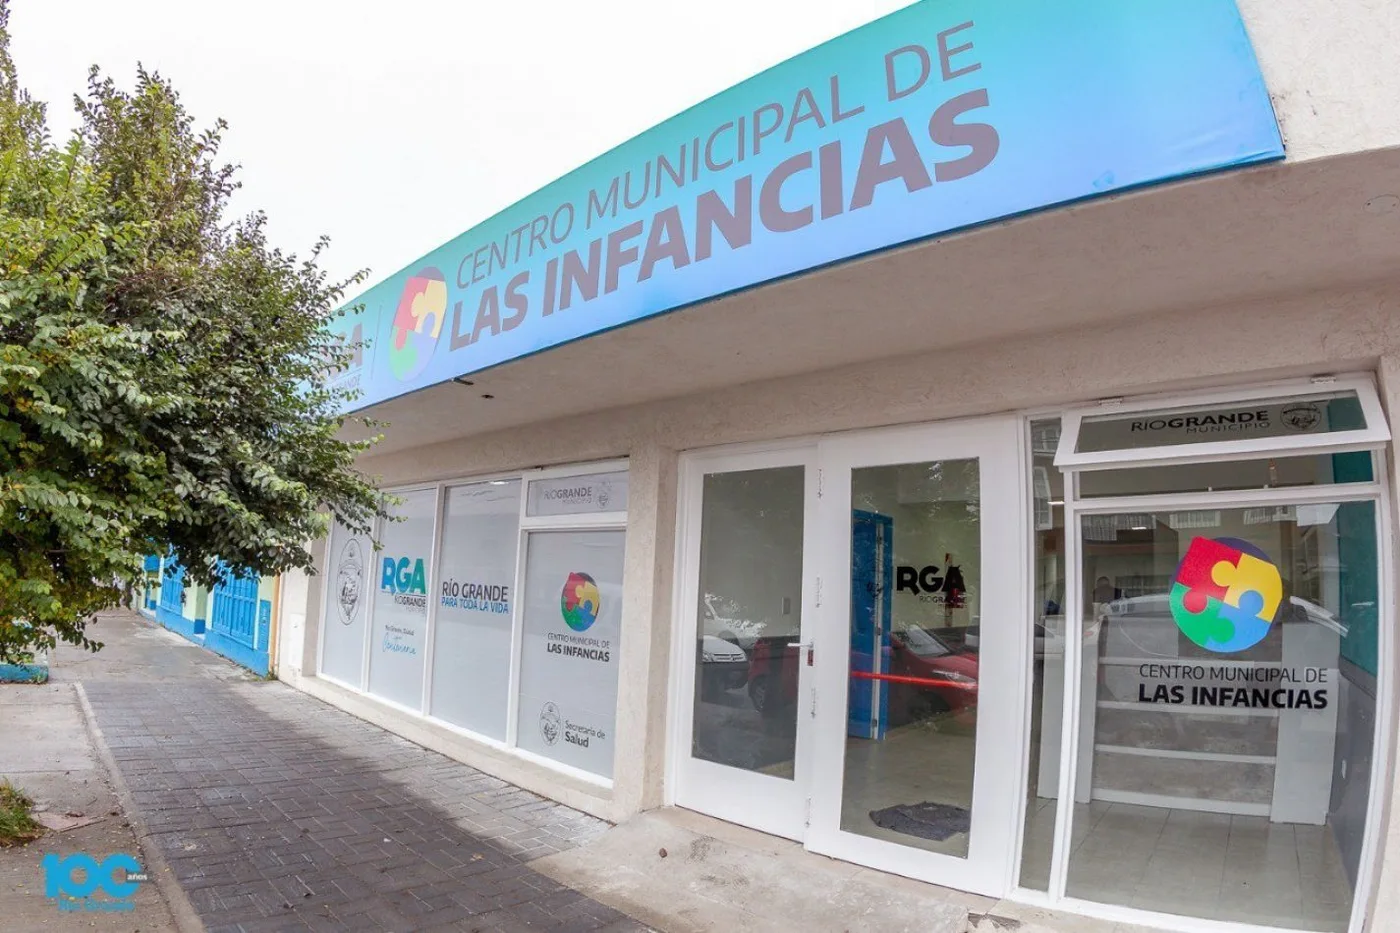 Centro Municipal de las Infancias.